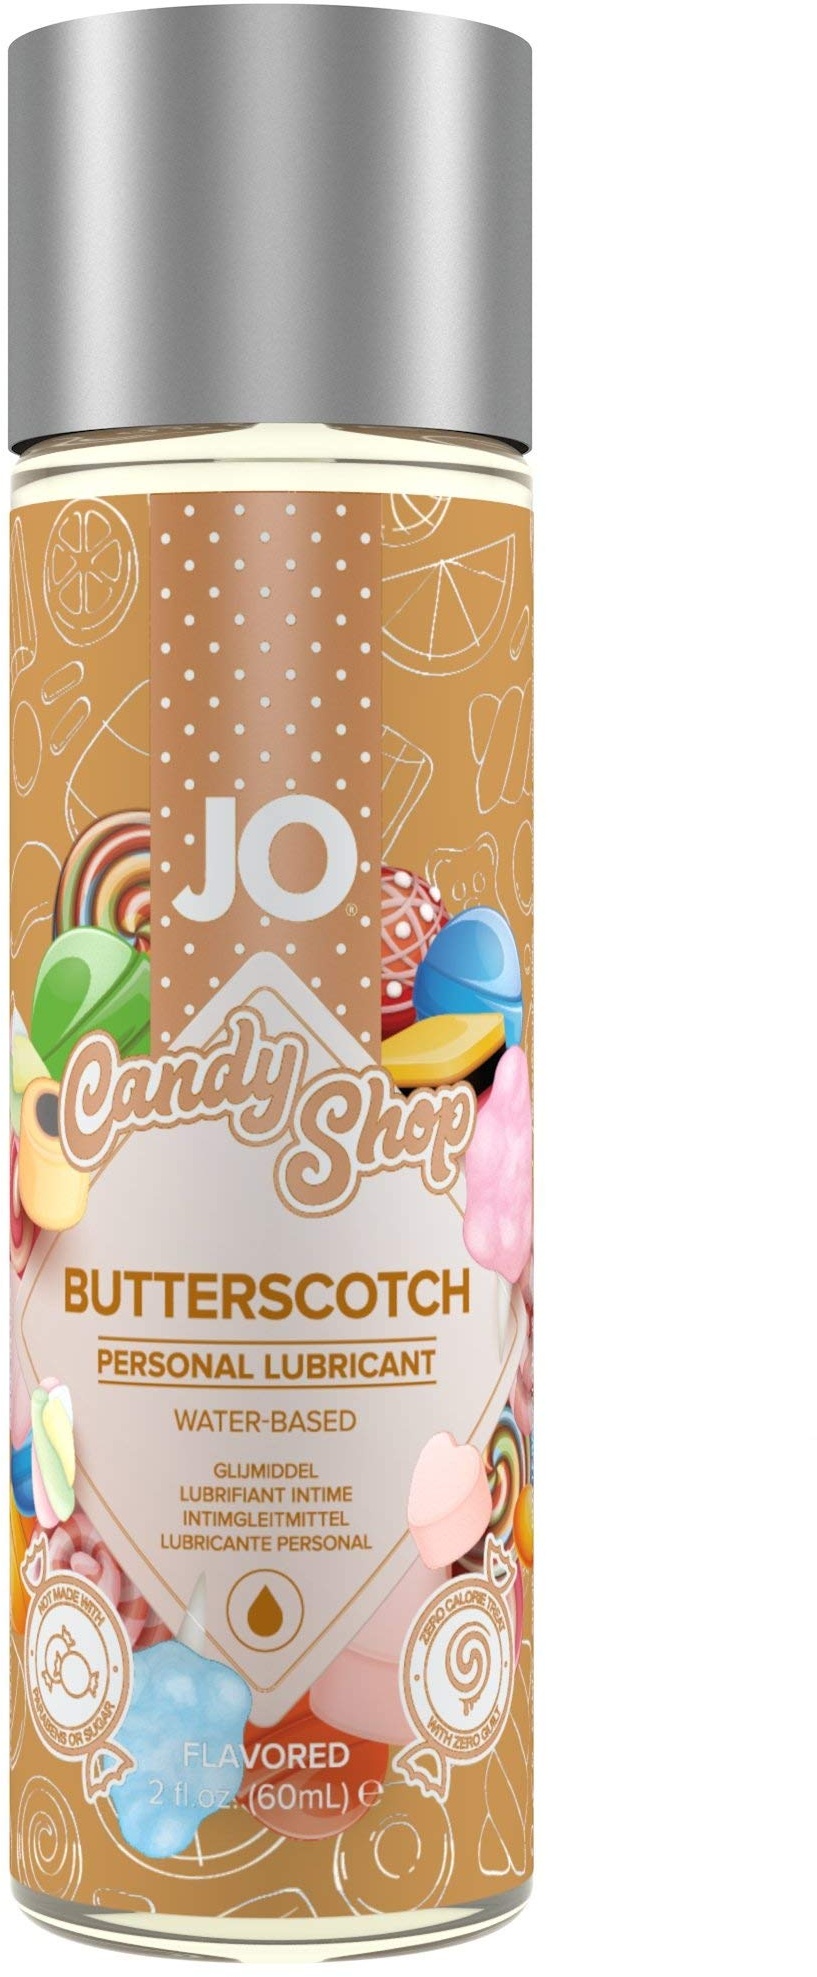 System Jo Candy Shop H2O Butterscotch Lubricant, 70 g